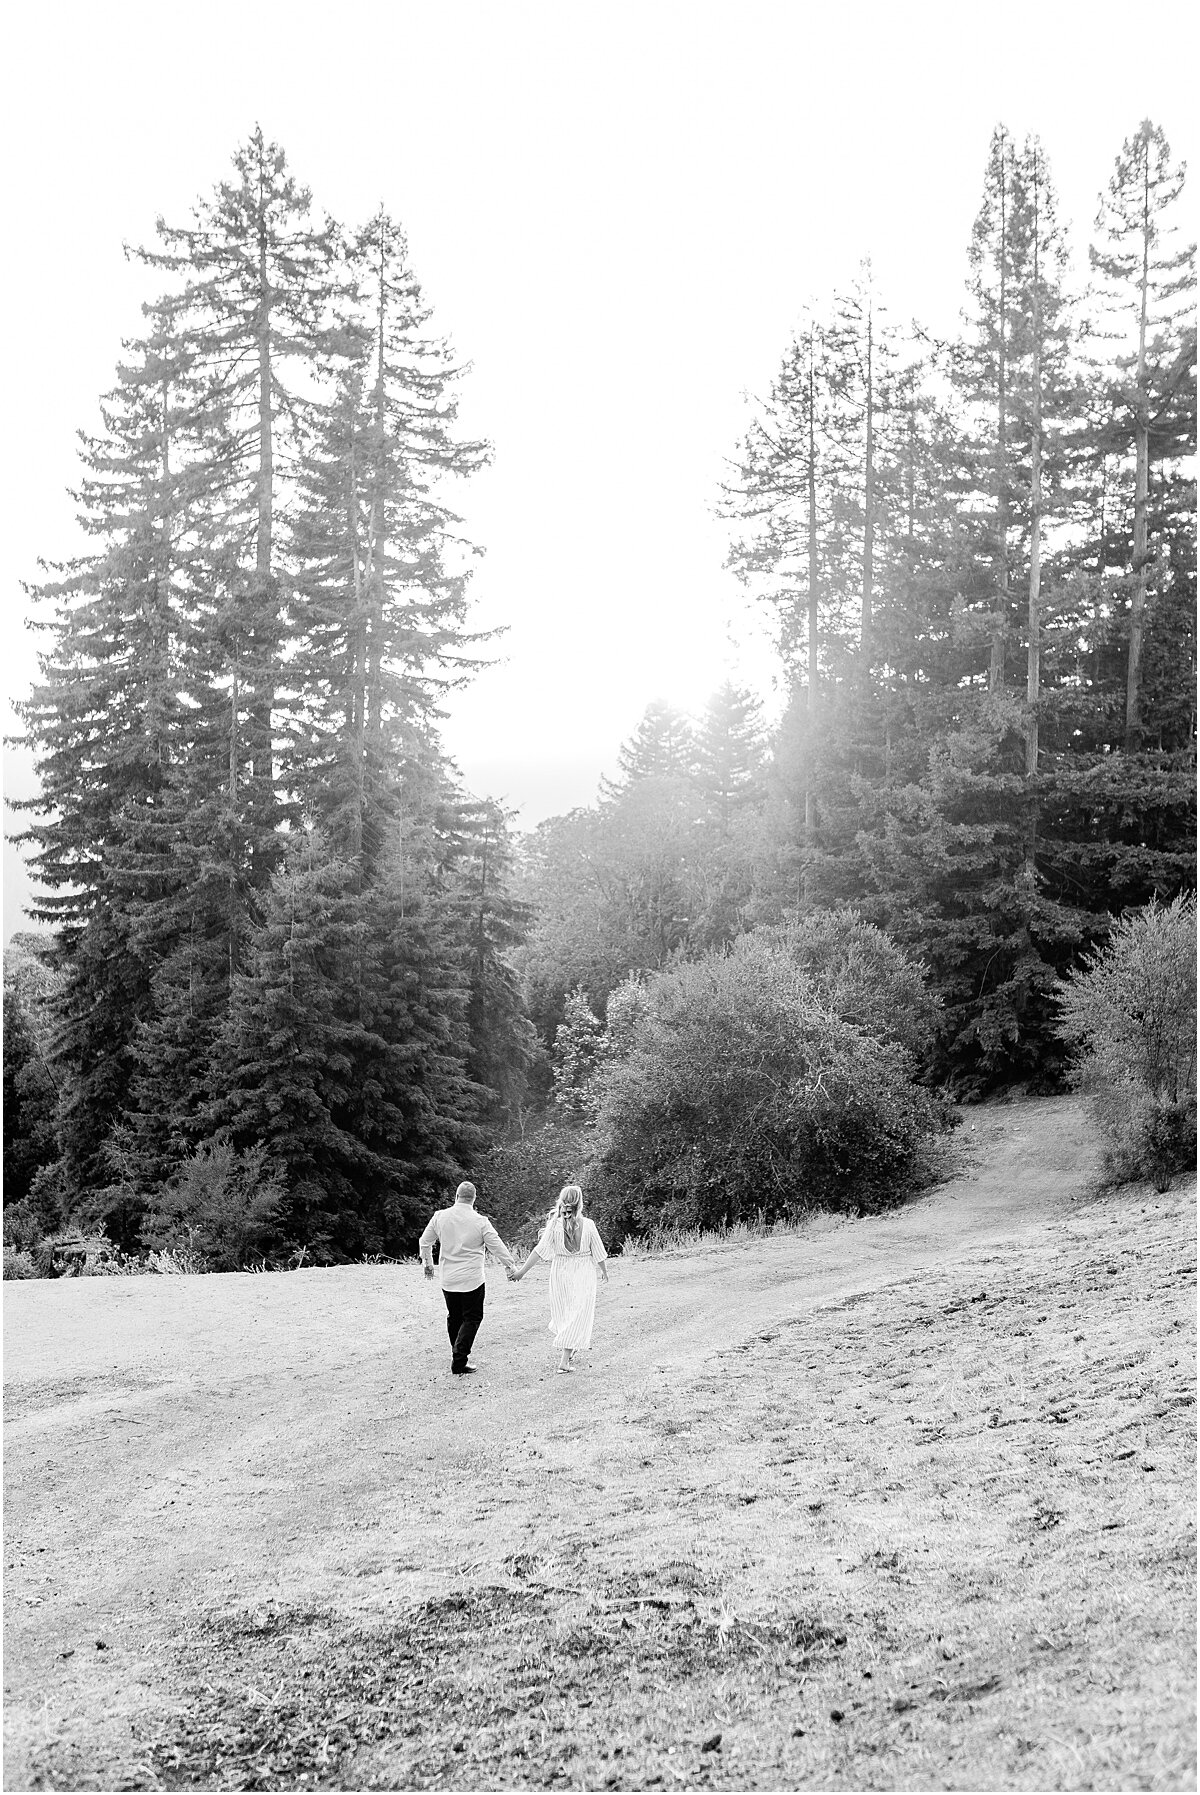 1985lukephotography.com | 1985 Luke Photography Bay Area San Francisco Northern California Wedding Engagement Photographers | Boulder Creek Engagements 43.jpg